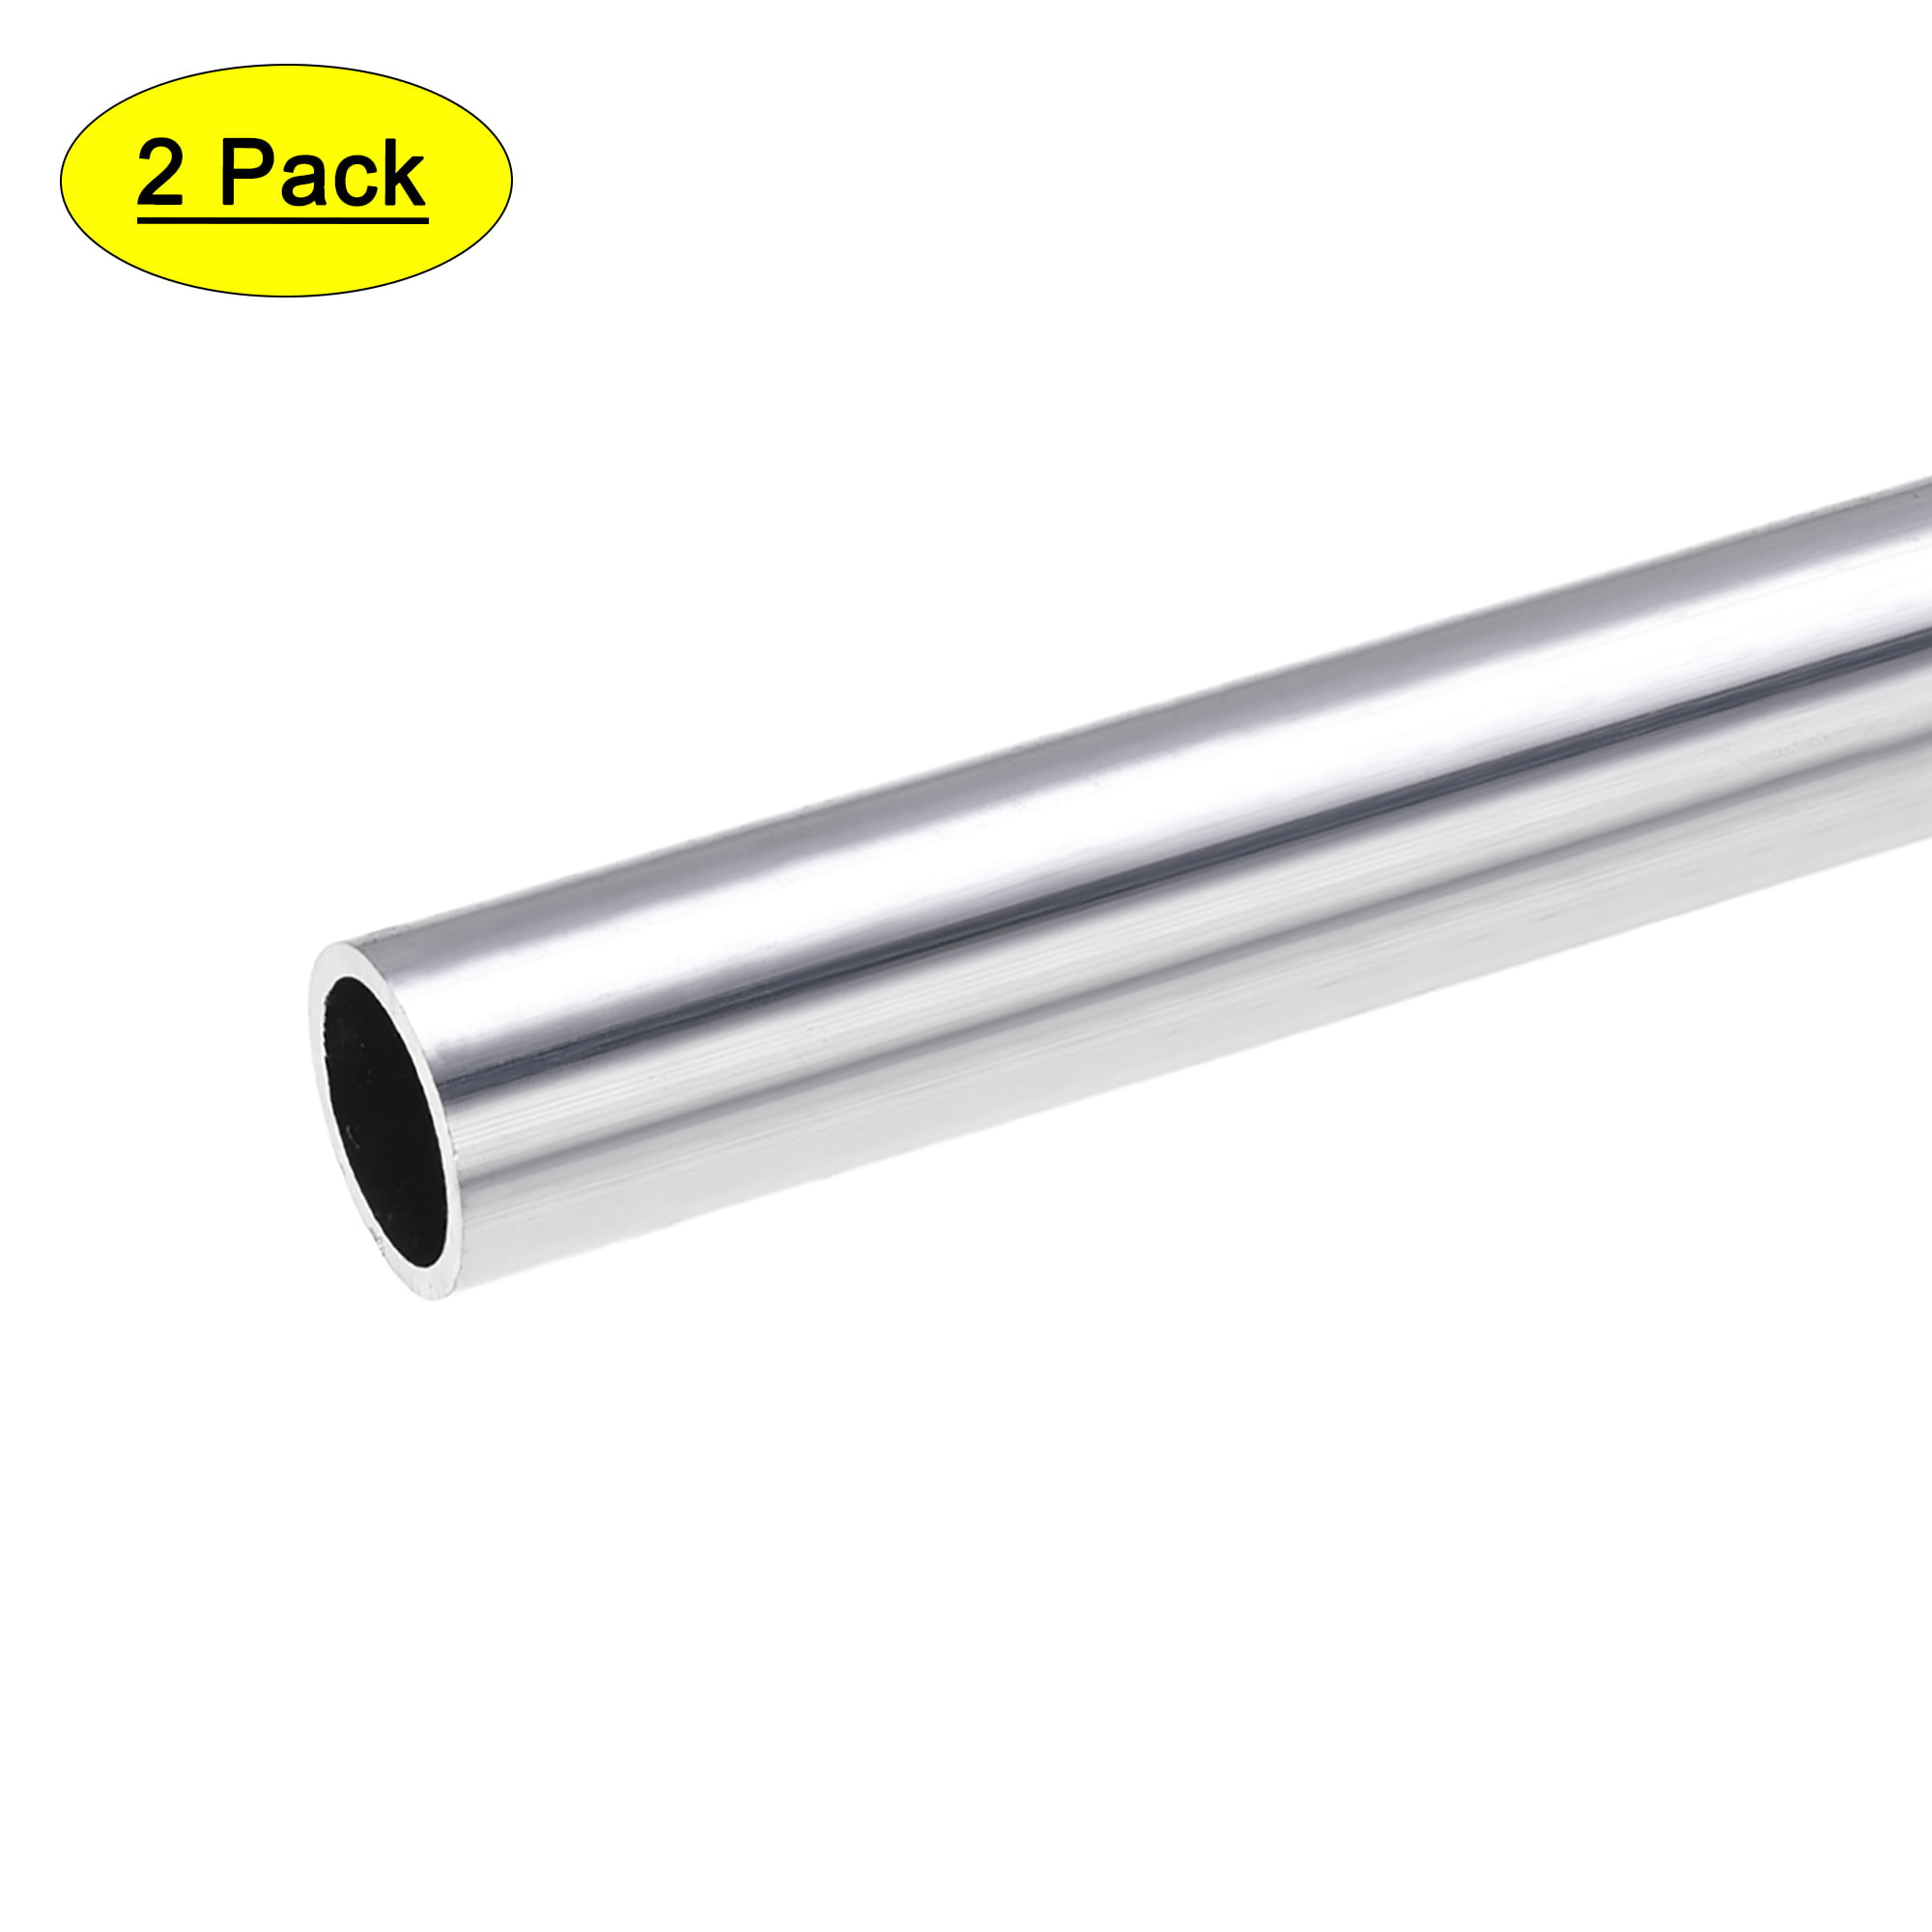 2 pieces 6063 Aluminum Round Tube 25mm OD 22mm Inner Diameter 100mm LENGTH PIPE